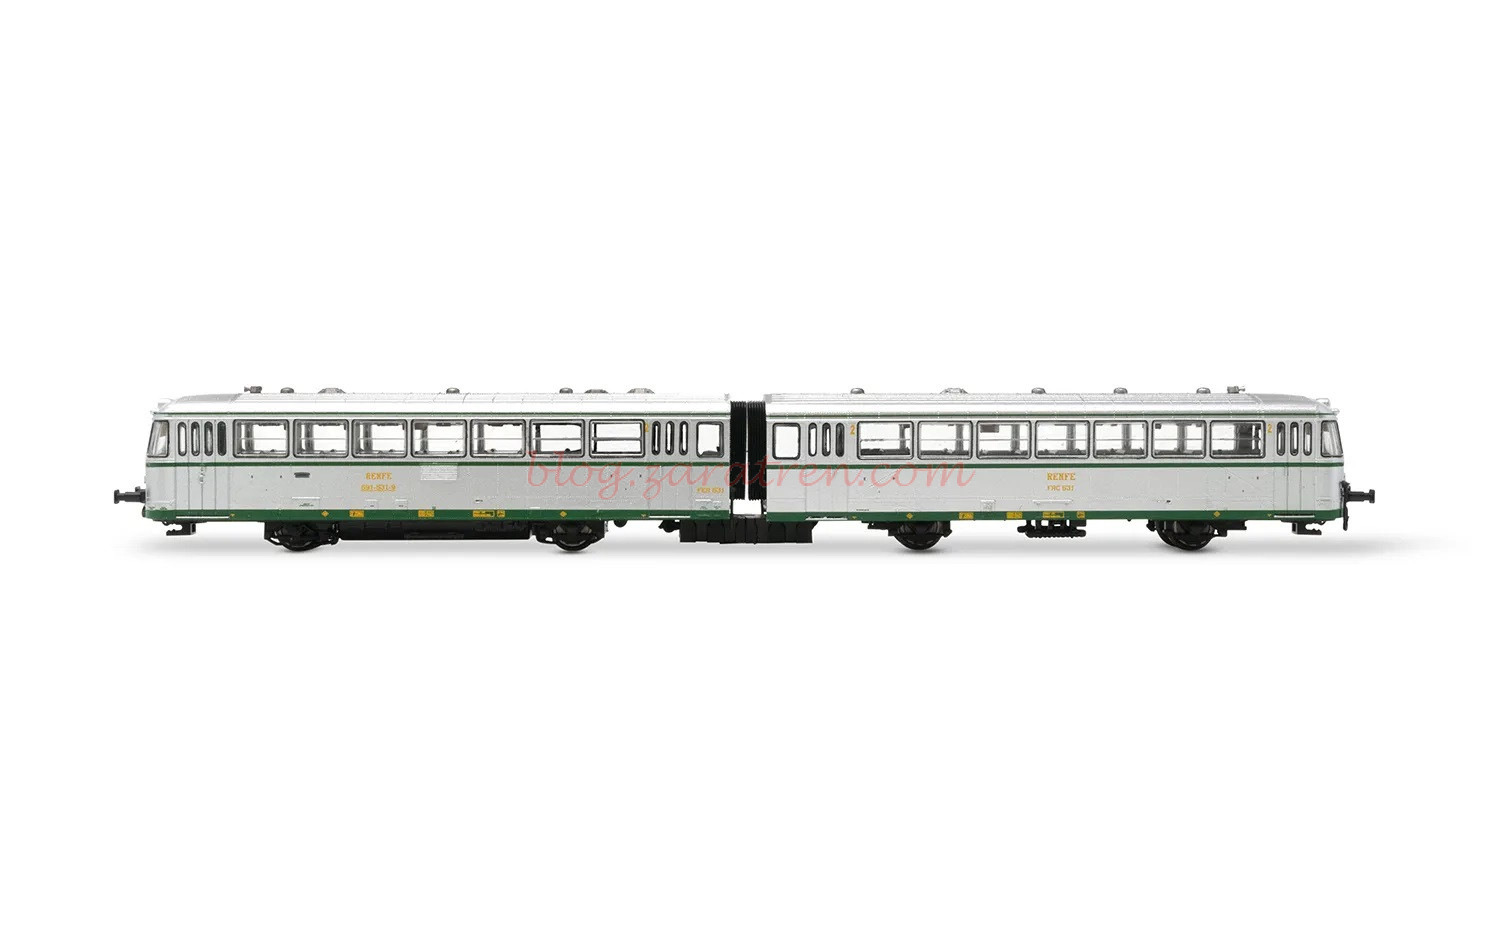 Arnold – Automotor diésel 591-531 “Ferrobús”, dos coches, plata, con UIC, RENFE, Analógico, Ep. IV, Escala N, Ref: HN2351